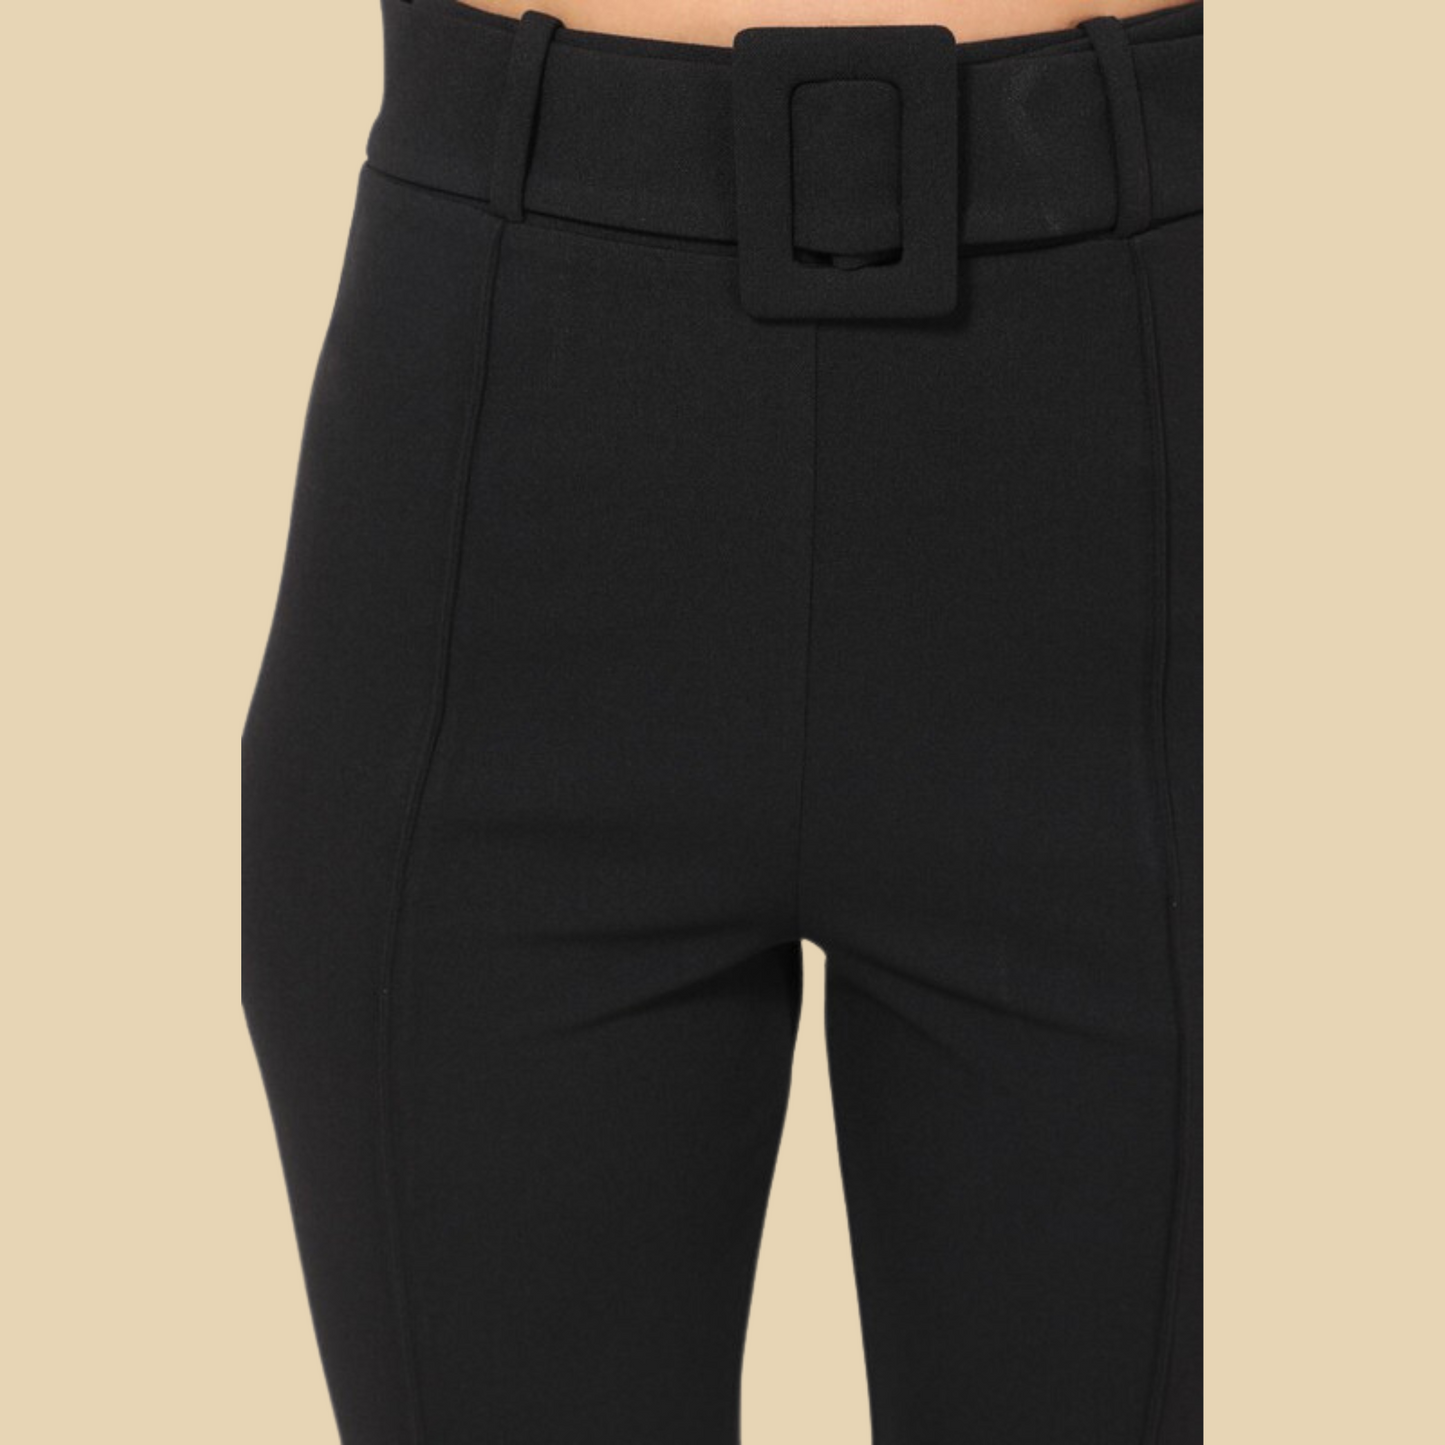 Black Sexy Pants